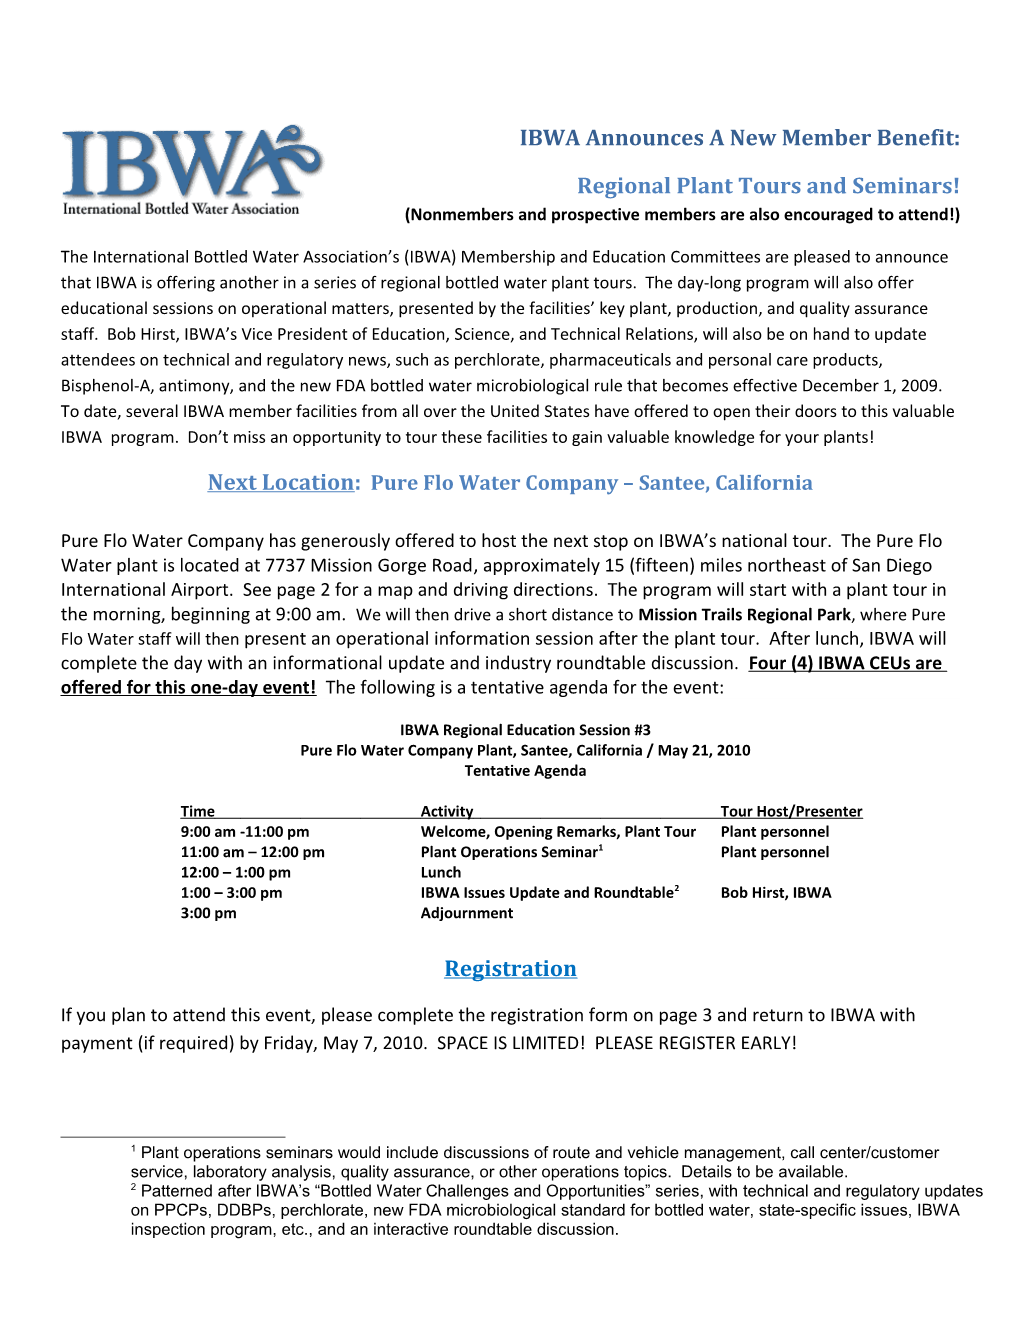 IBWA Announces a New Member Benefit